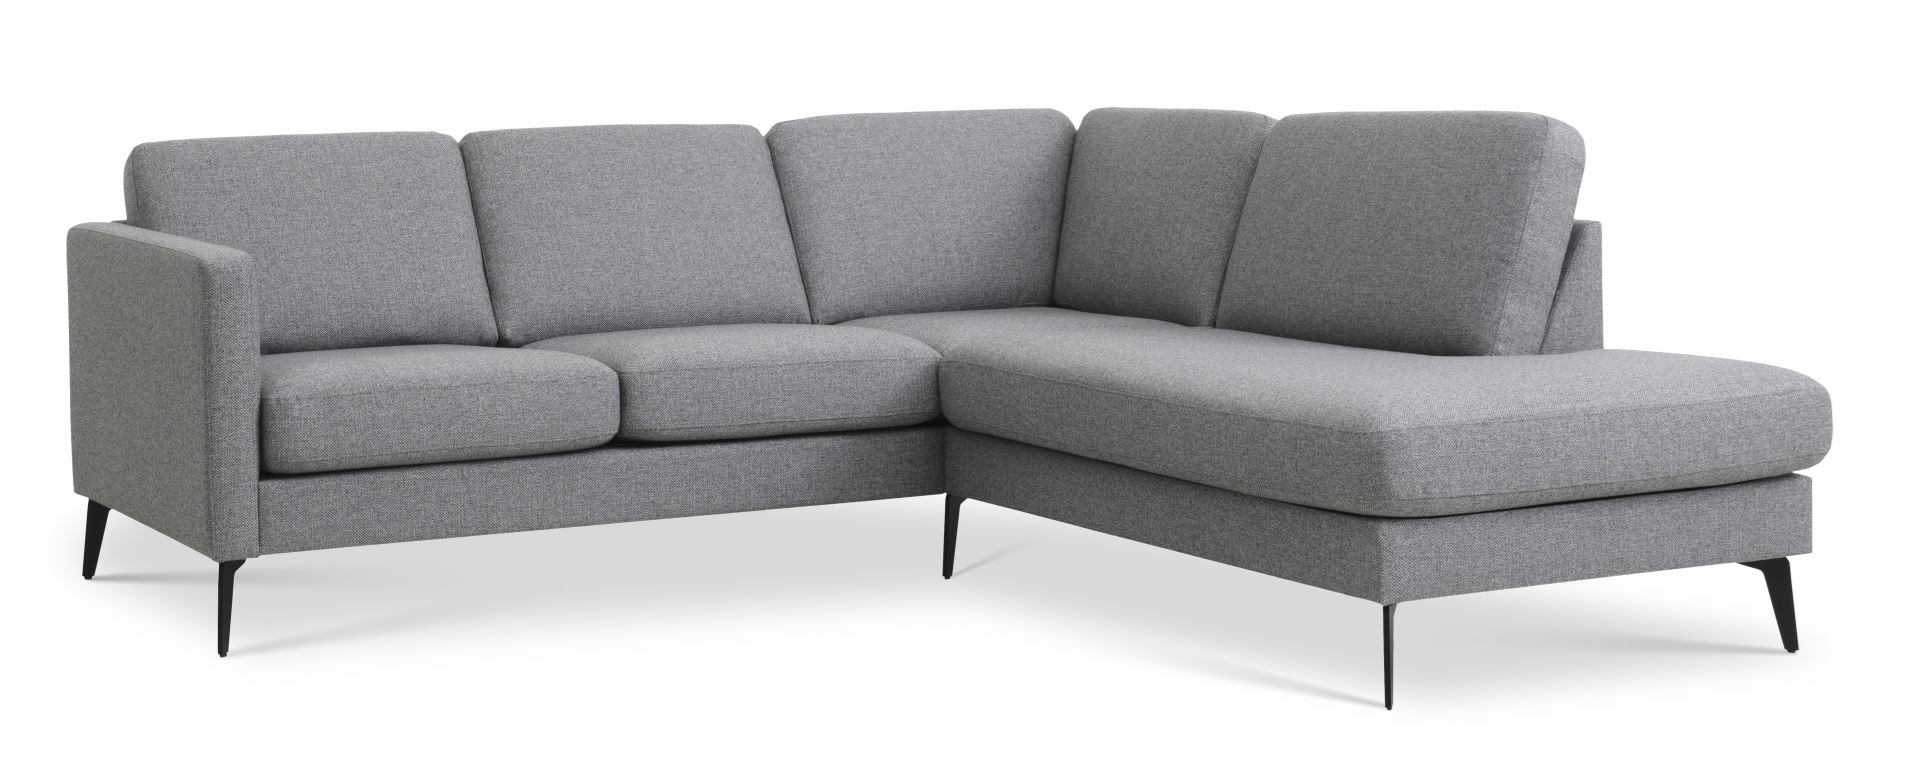 Ask sæt 53 lille OE sofa, m. højre chaiselong - lys granitgrå polyester stof og Eiffel ben